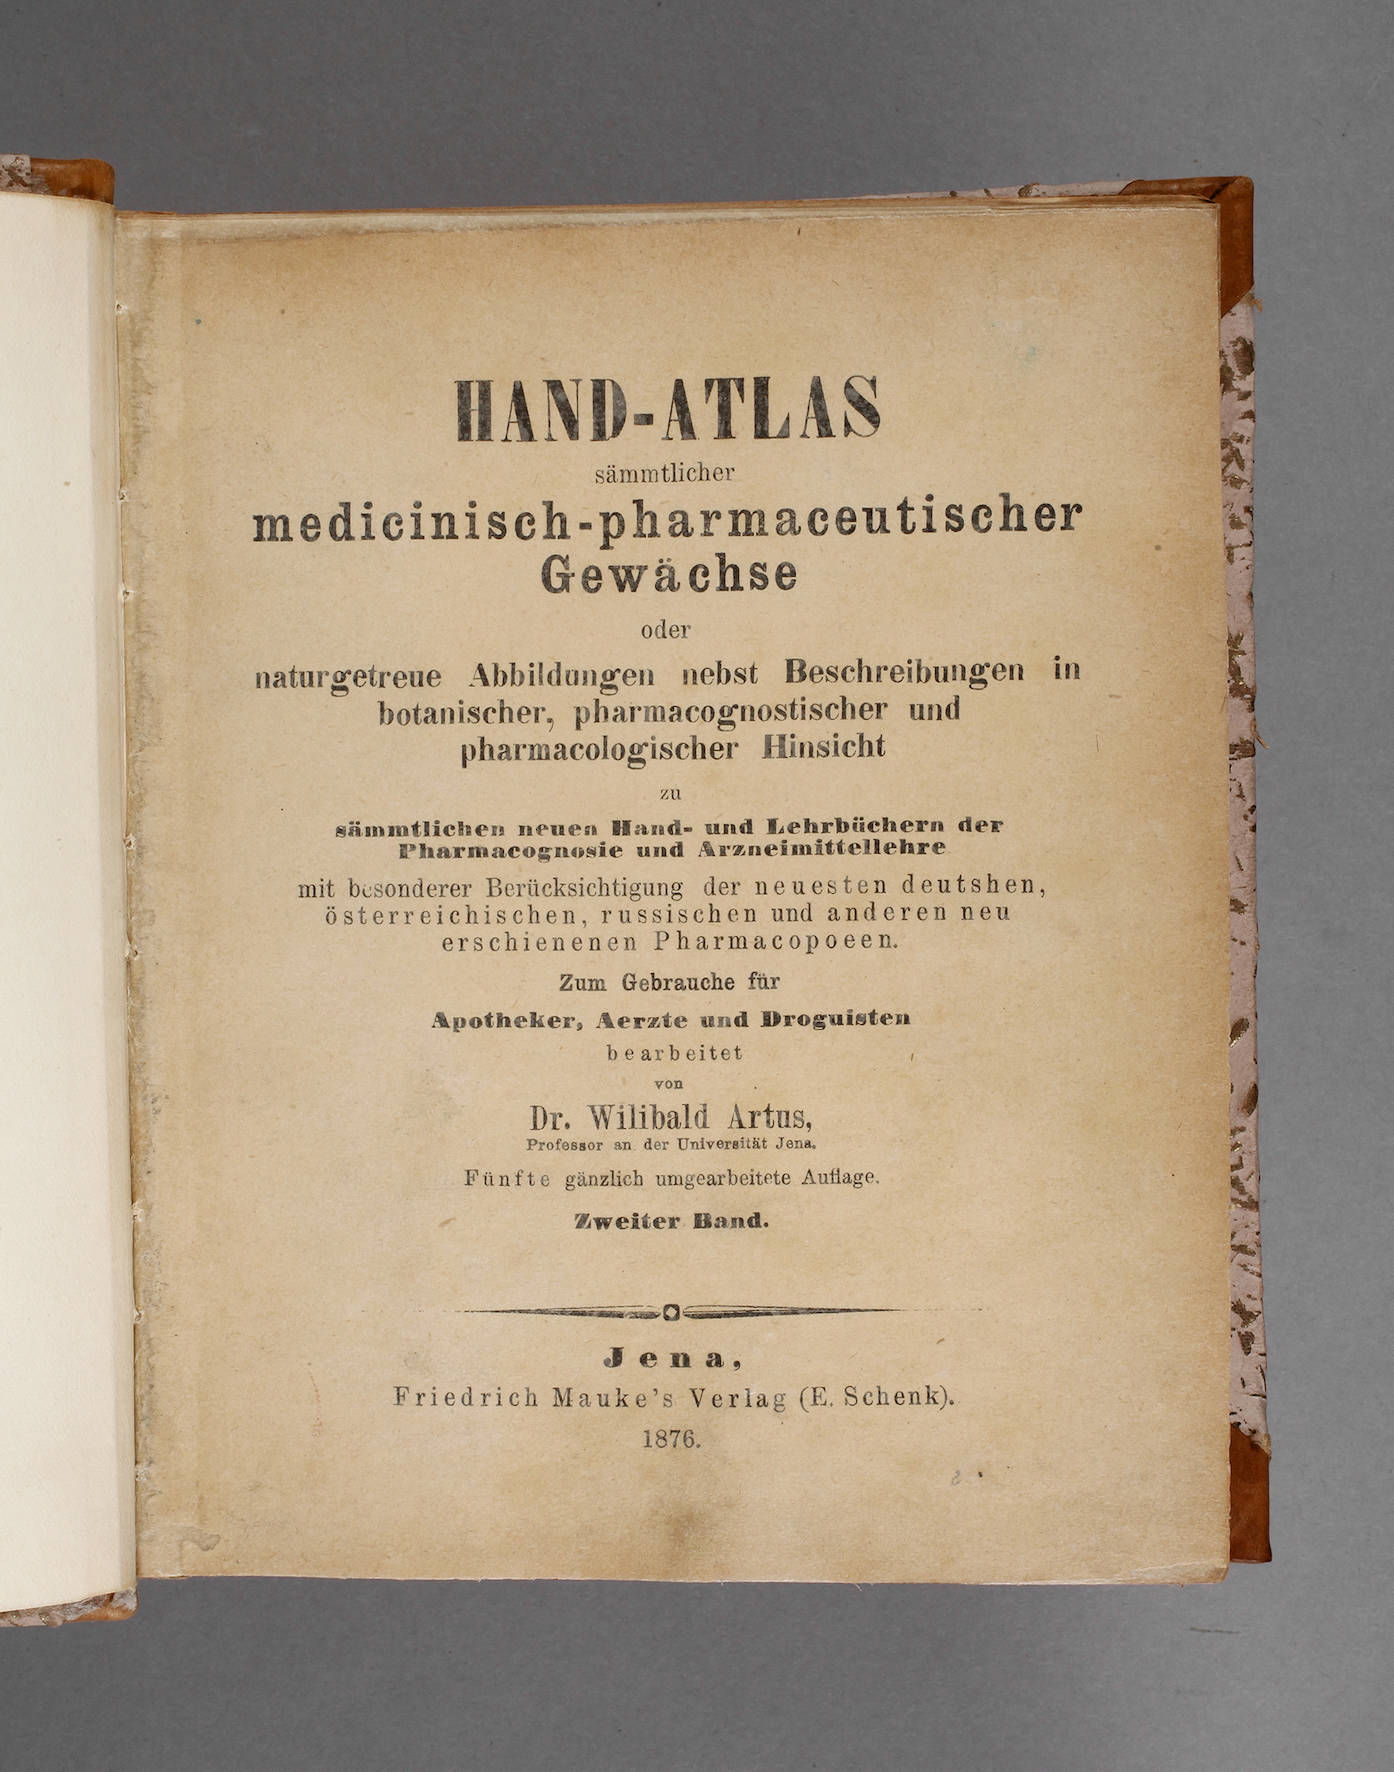 Arthus' Handatlas der Heilpflanzen 1876